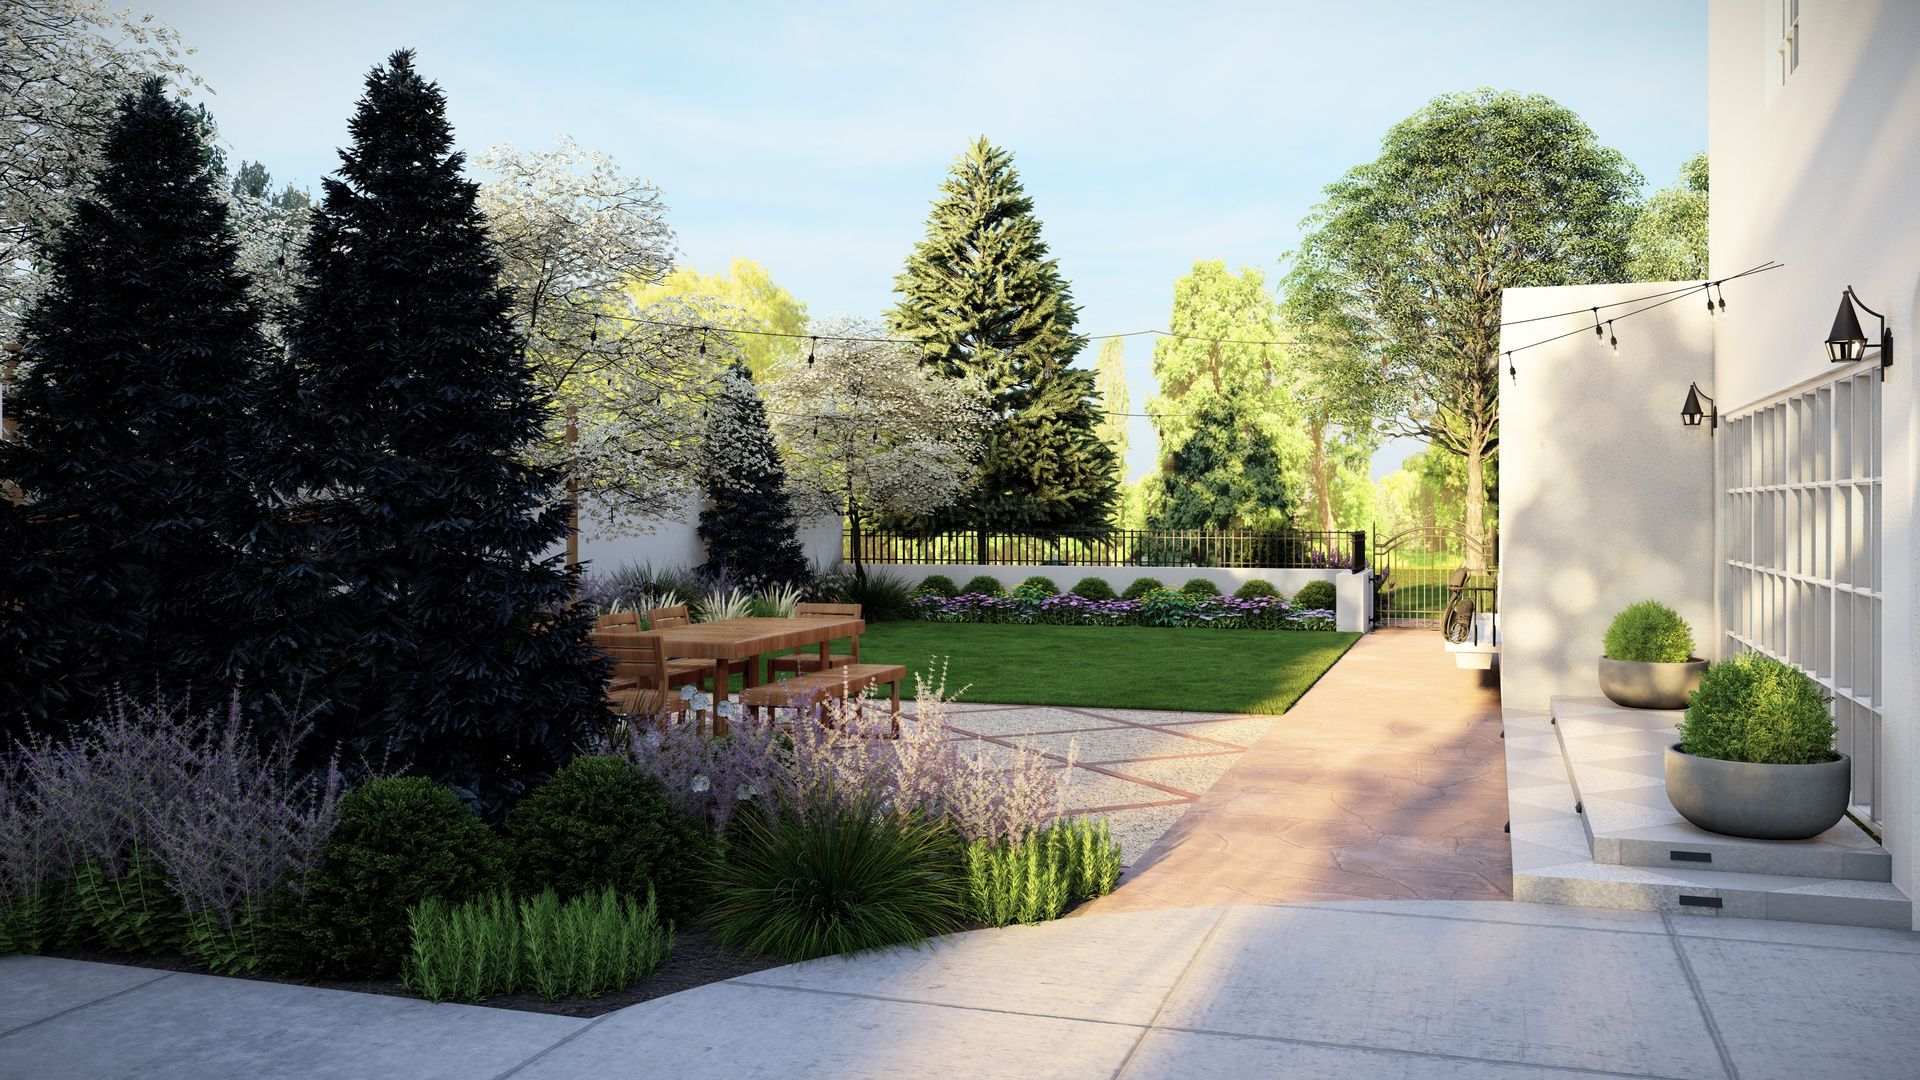 Denver landscaping ideas for a small backyard 